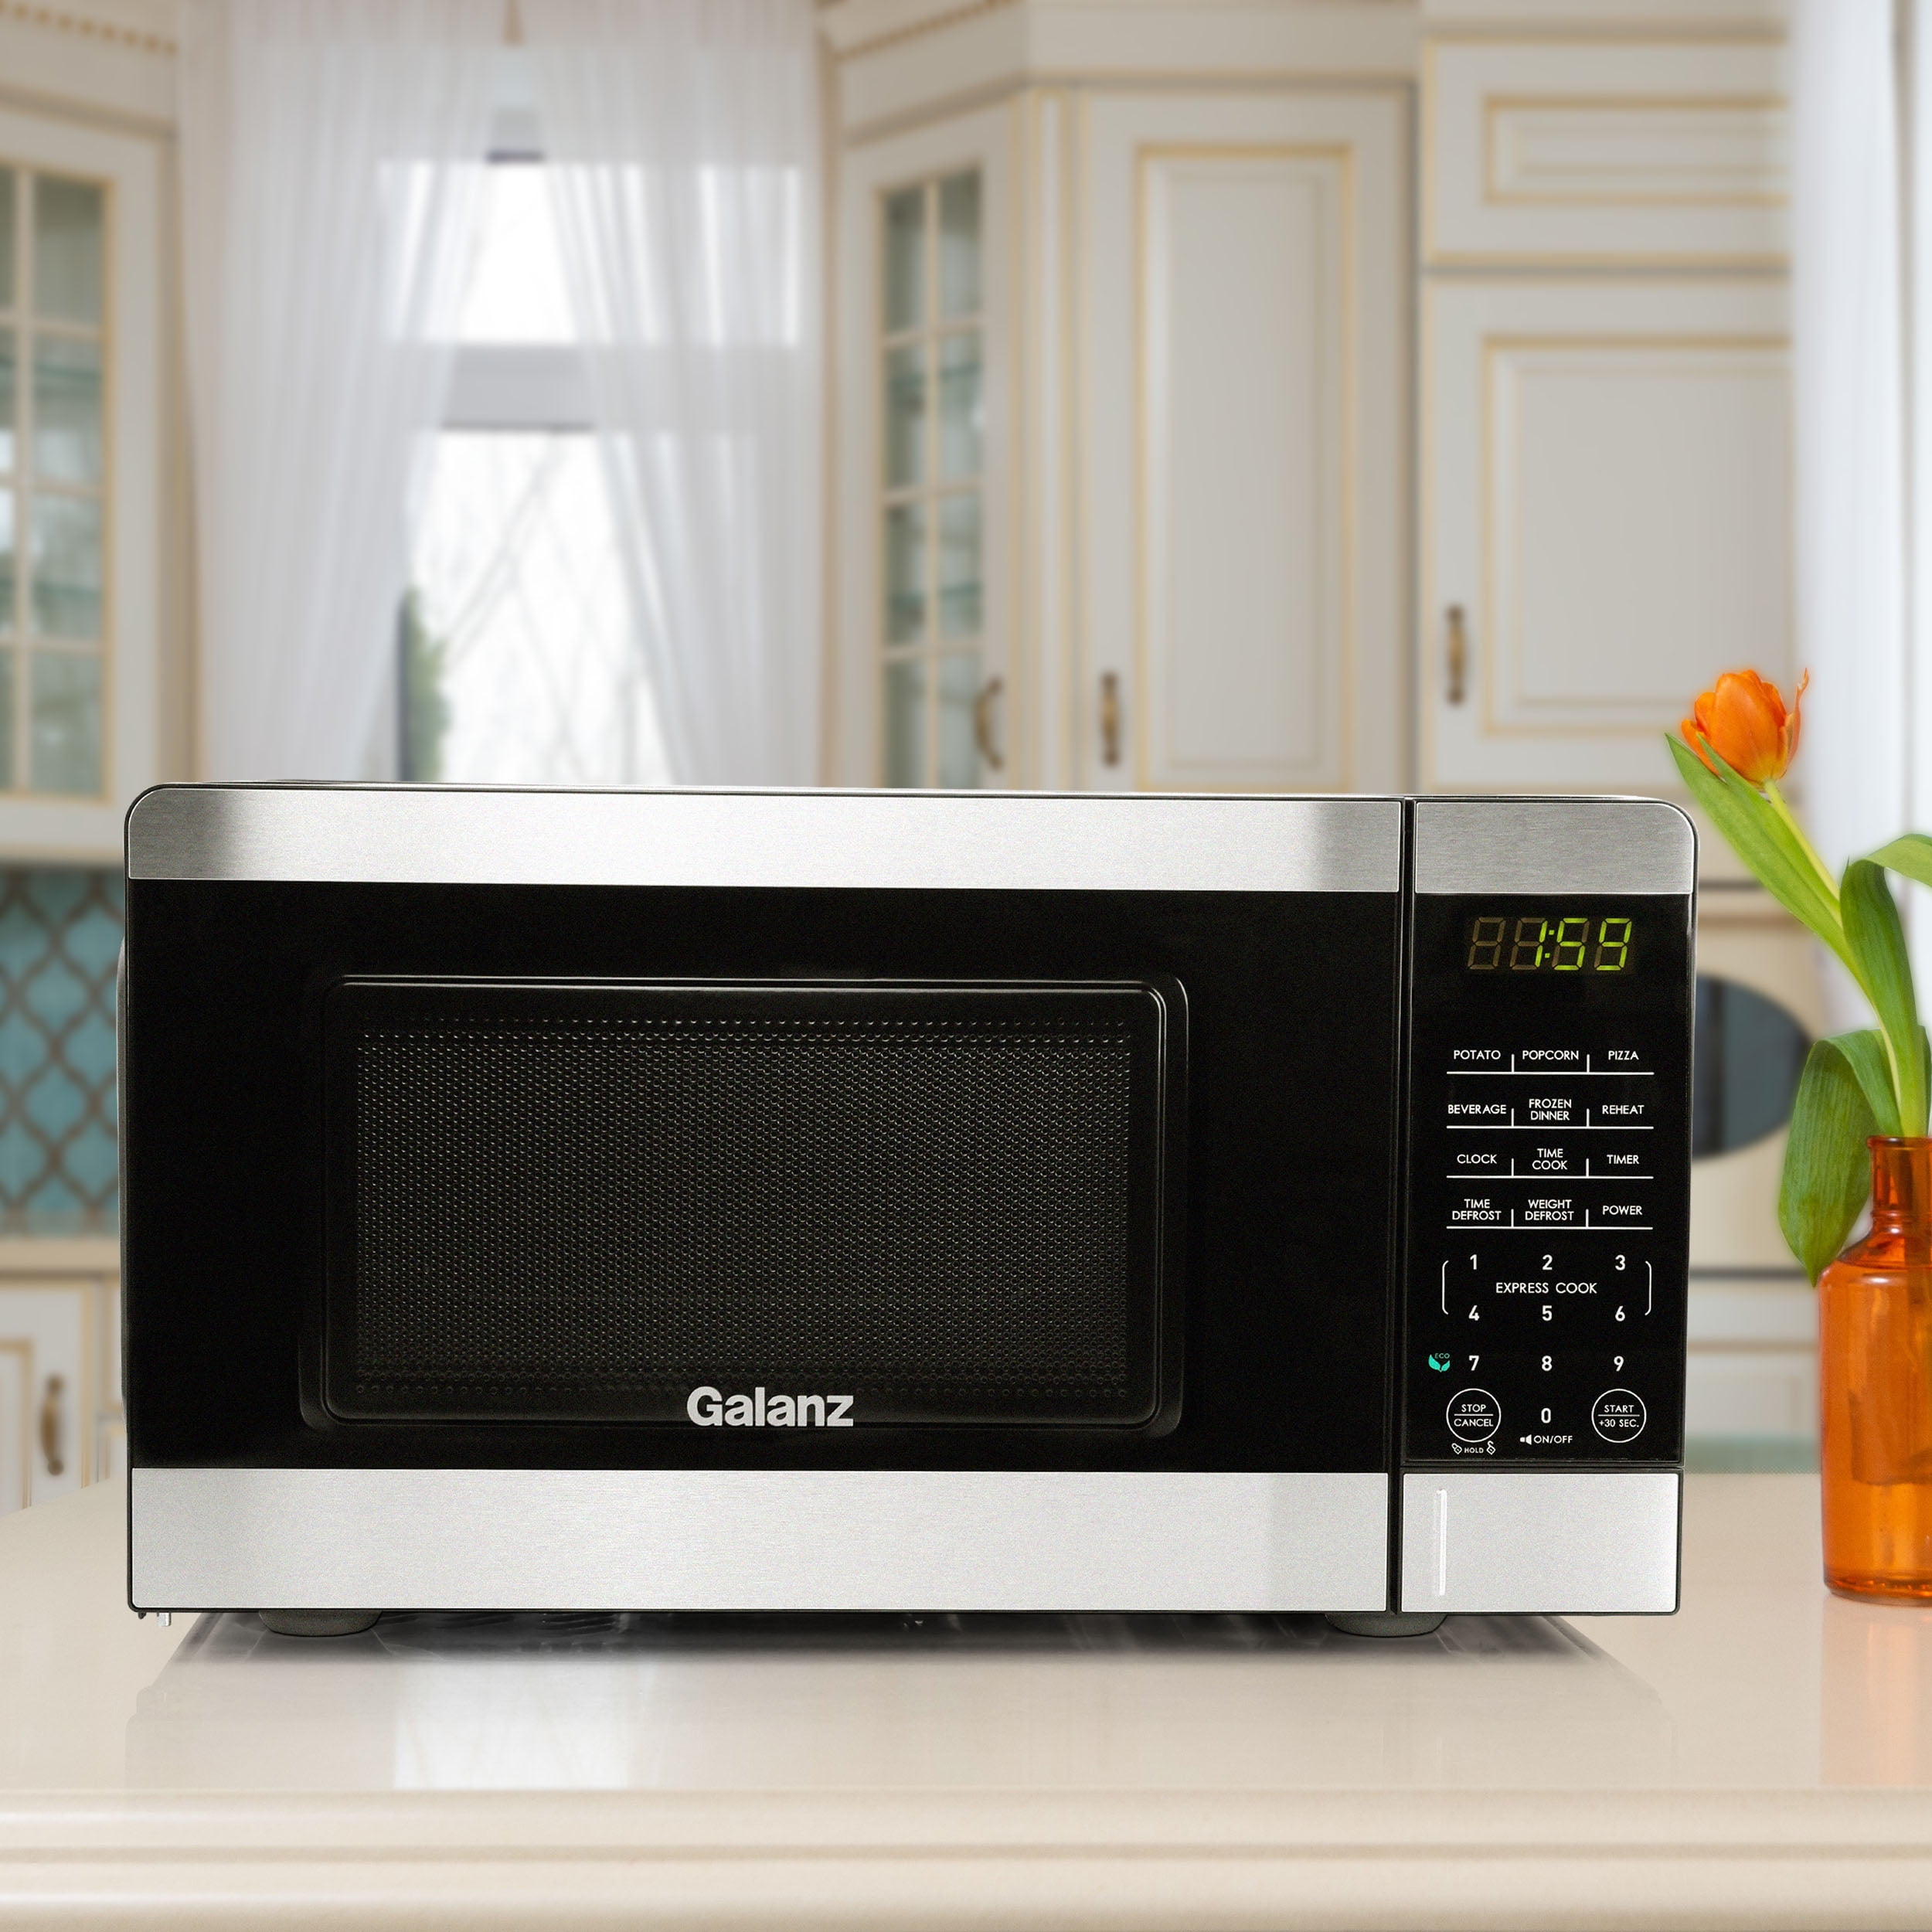 Galanz 0.7 Cu. Ft. 700 Watt Countertop Microwave Oven in Silver 